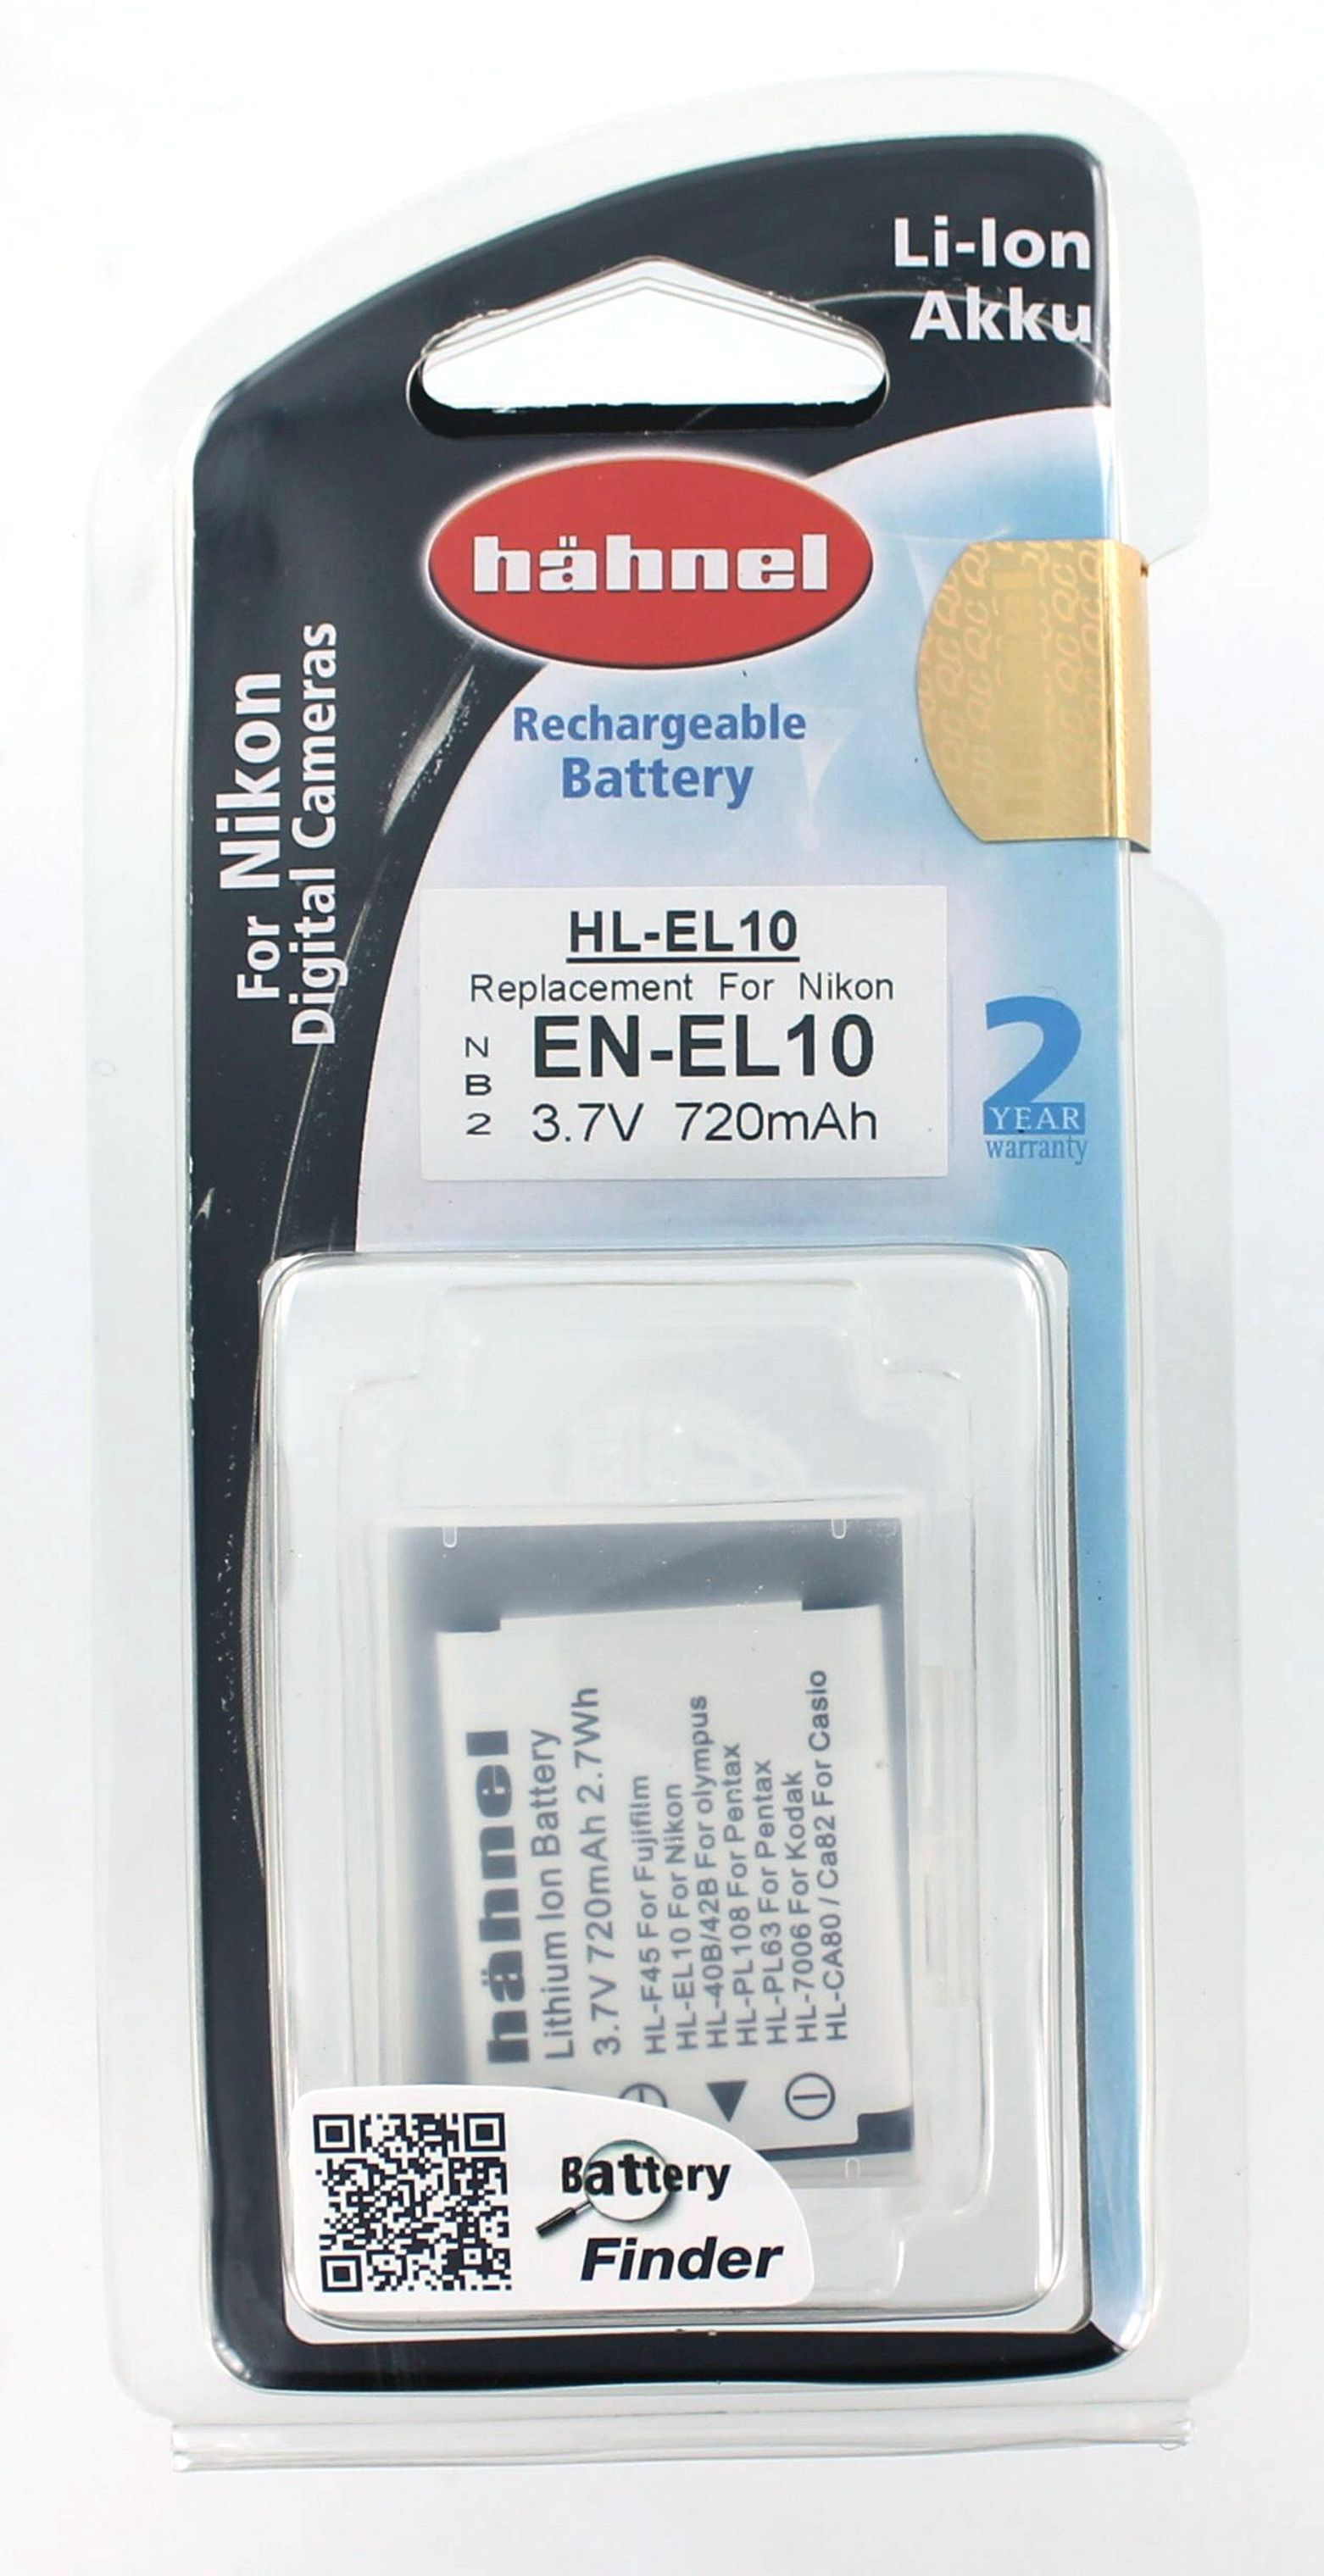 MOBILOTEC Hähnel 3.7 EN-EL10 kompatibel mit 660 mAh Akku, Volt, Li-Ion, Nikon Akku Li-Ion